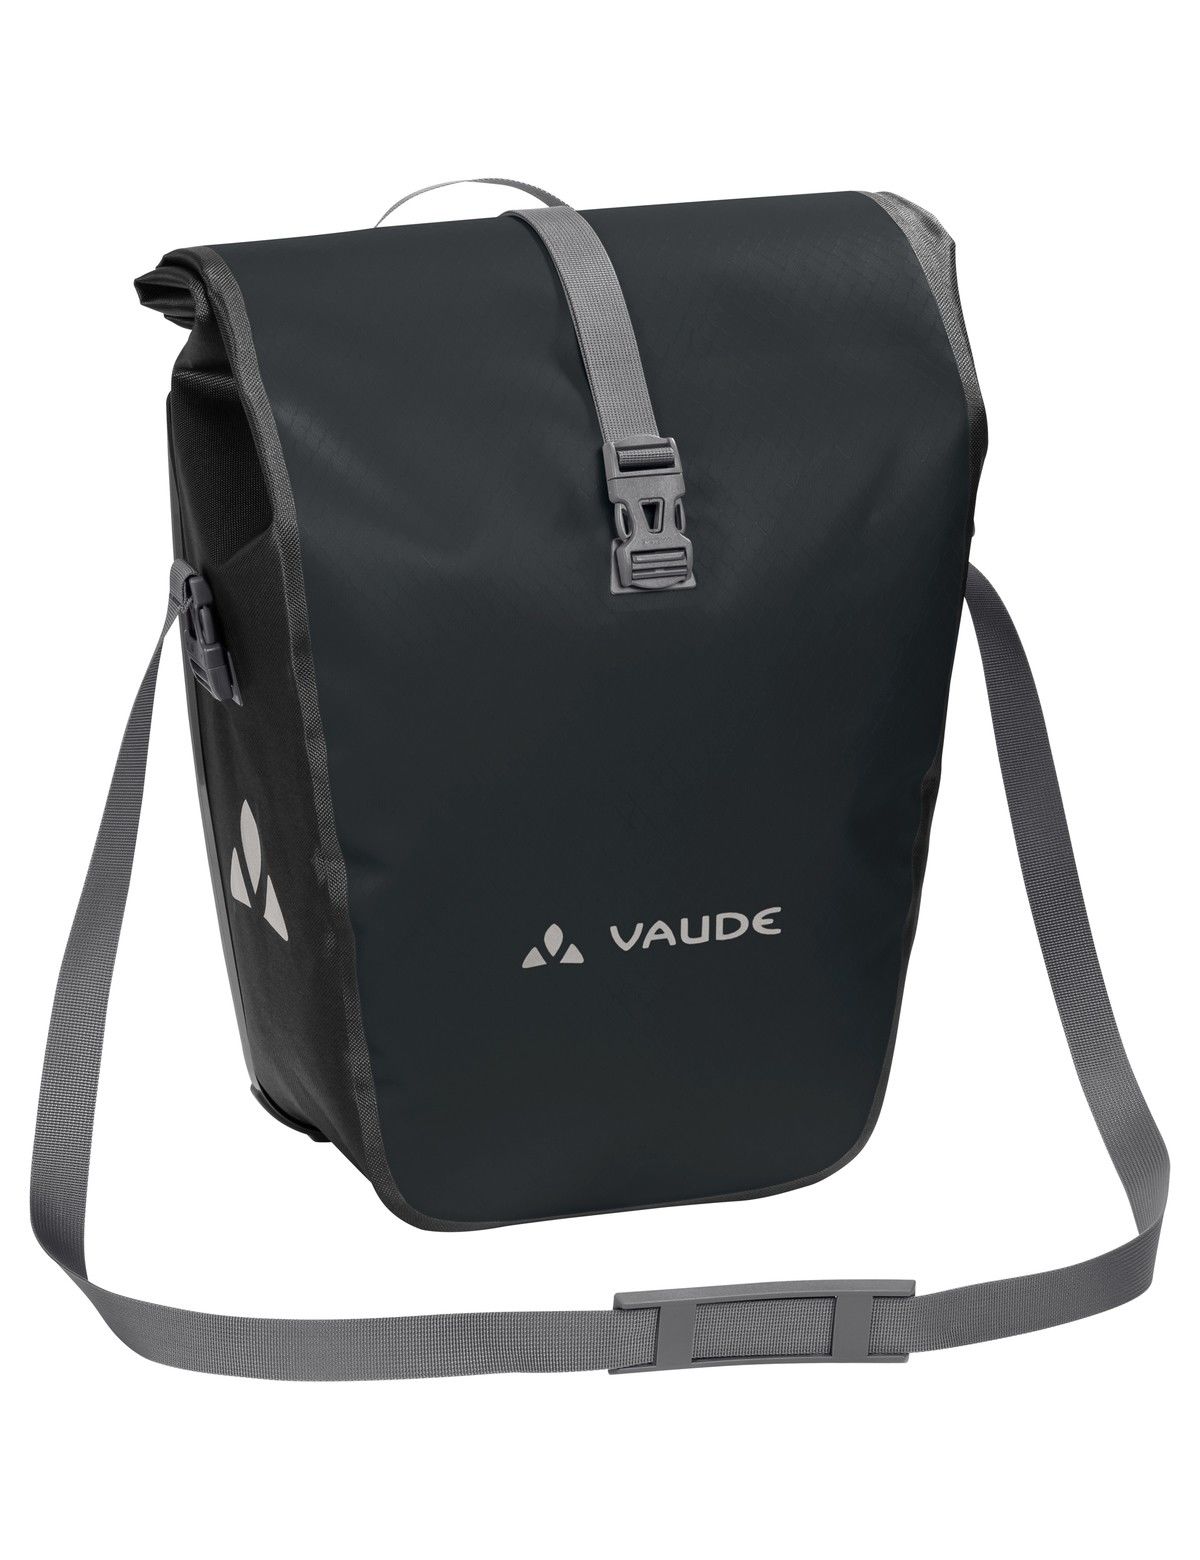 Vaude Aqua Back Single Schwarz- Fahrradtaschen- Grsse 24l - Farbe Black unter Vaude